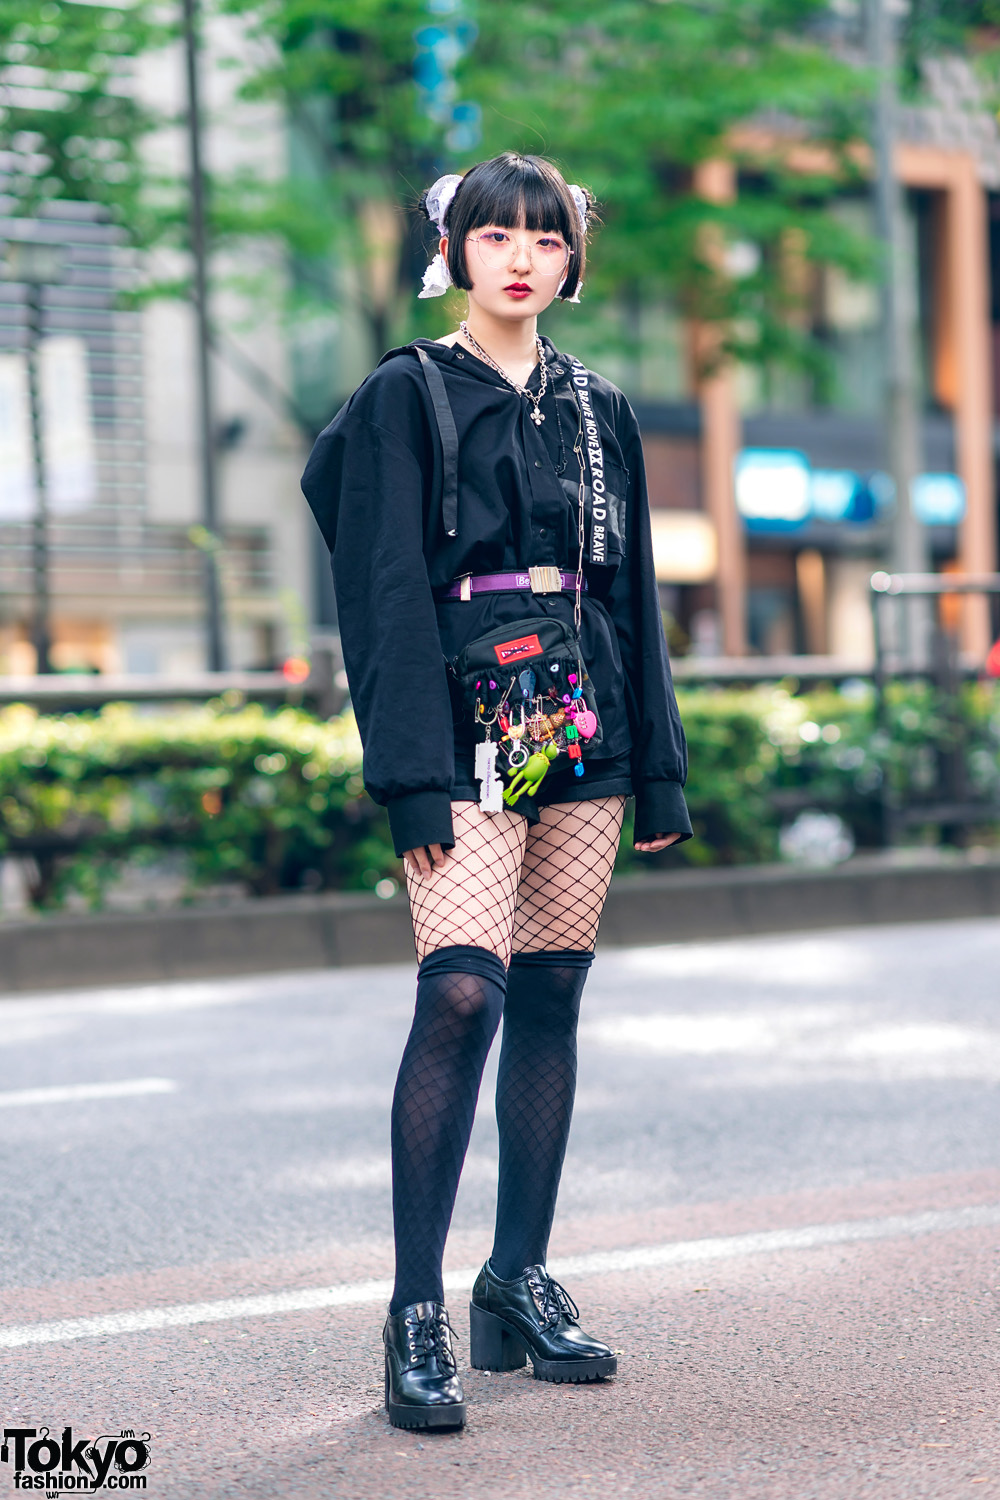 All Black Tokyo Street Style w/ Twin Buns Hairstyle, Zara Hoodie Shirt, Cuffed Shorts, Fishnets, Pokemon, Kinji, MilkFed Bag & Pointy Ankle Boots